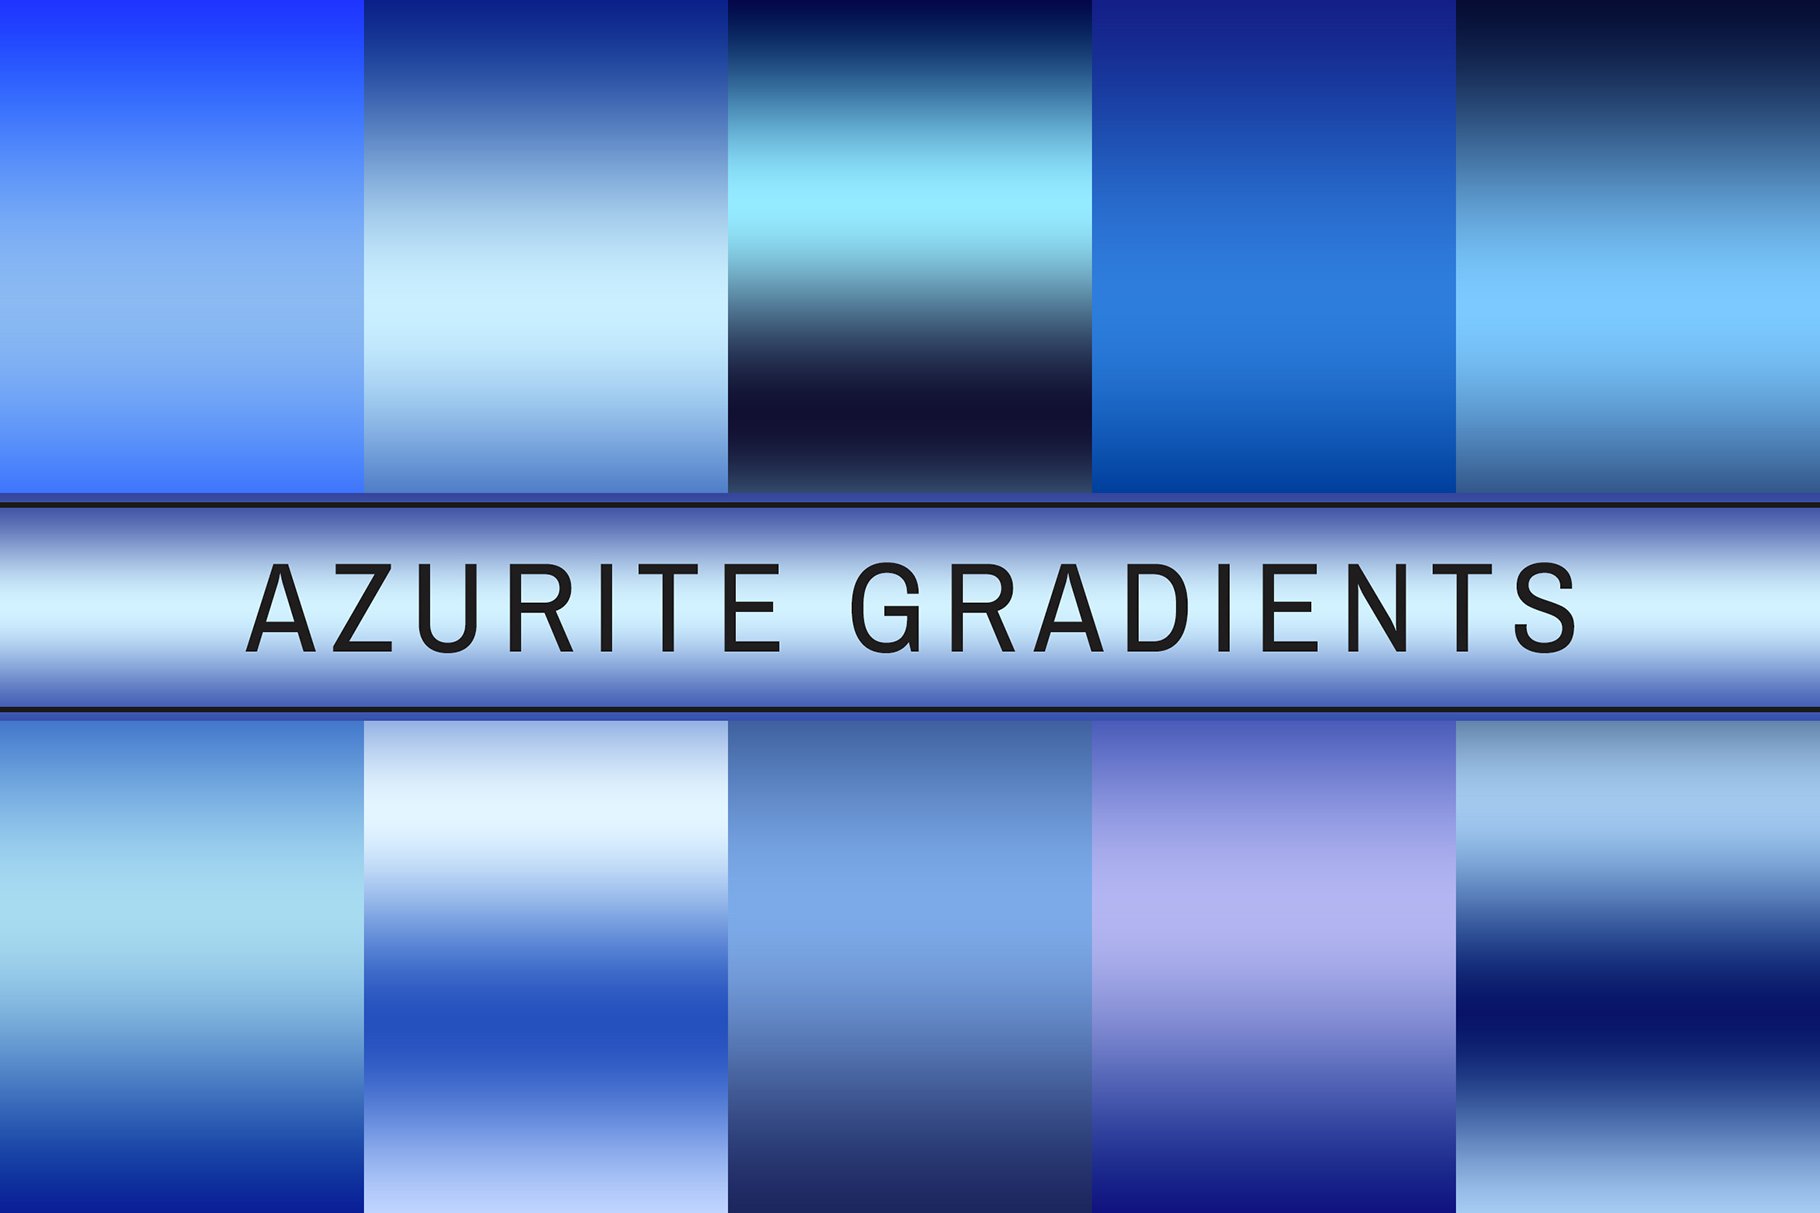 Azurite Gradients cover image.